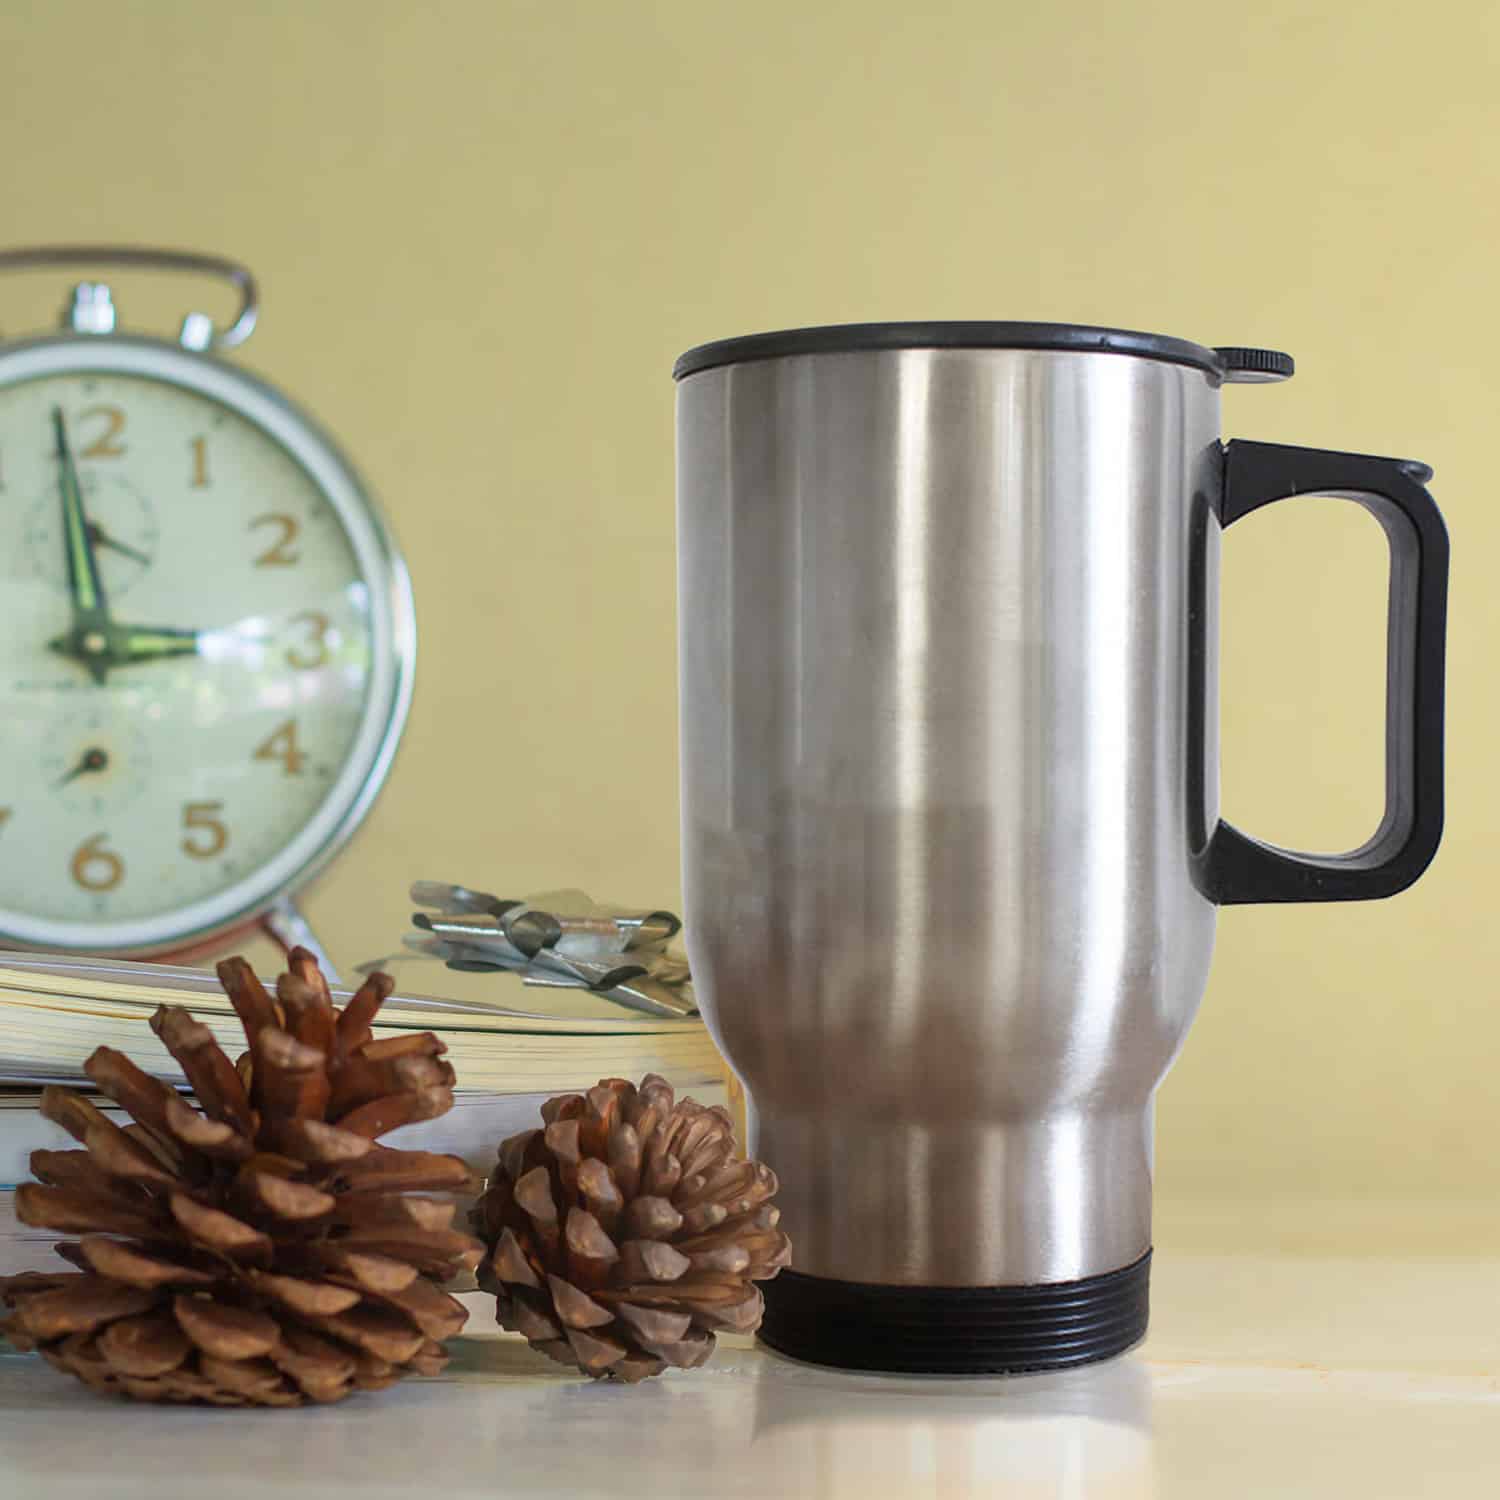 Free travel mug mockups to increase your ecommerce sales